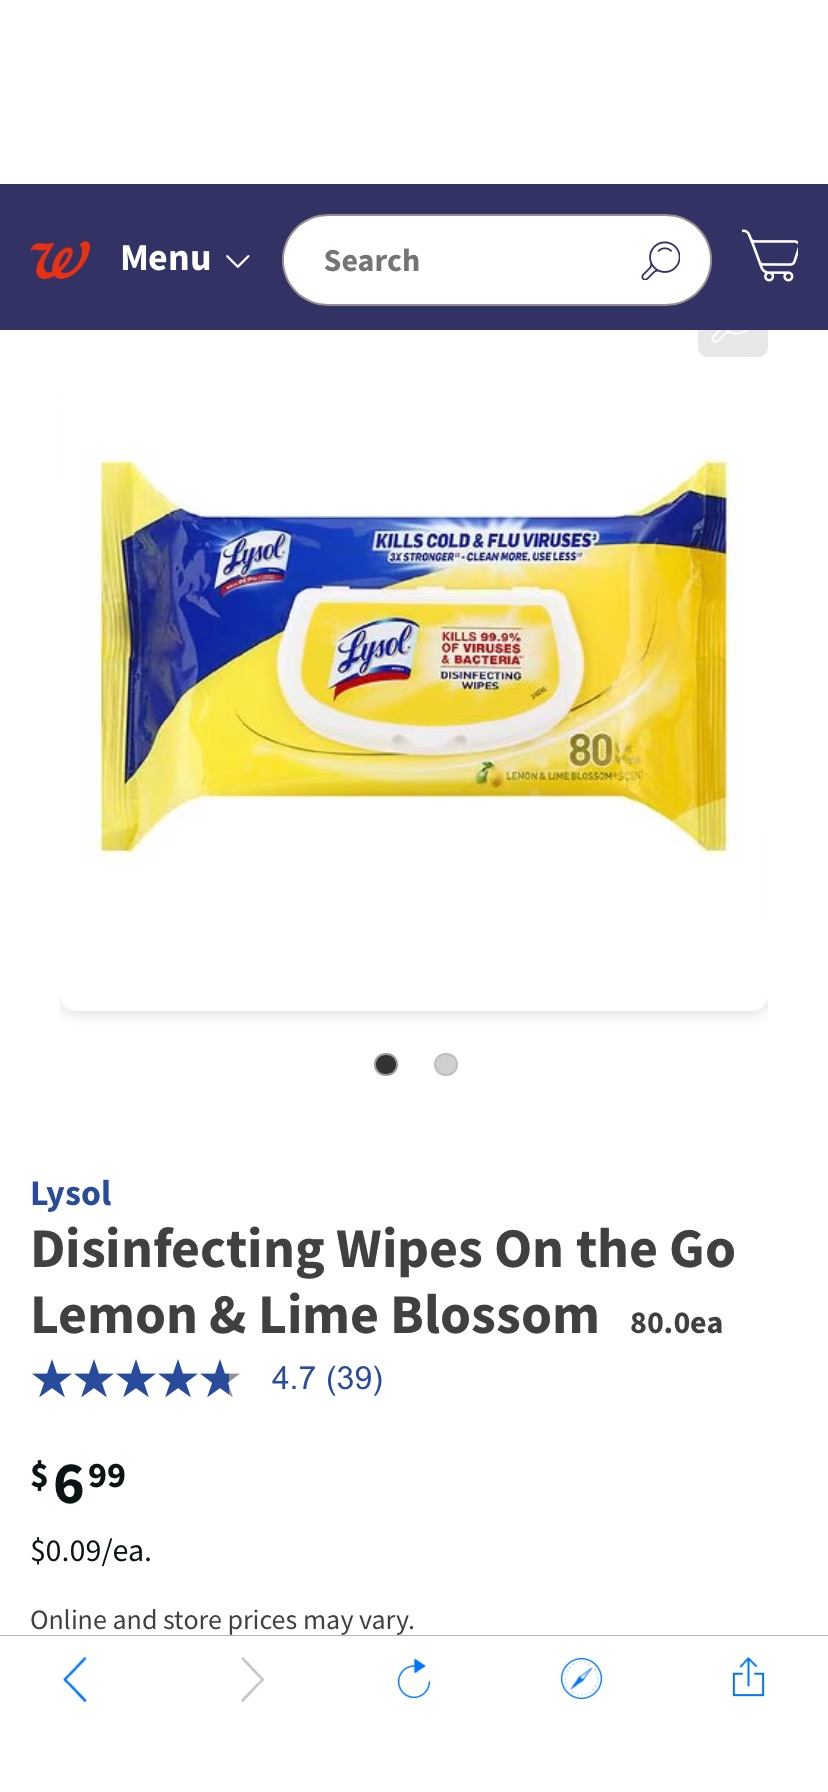 Lysol消毒濕紙巾Disinfecting Wipes On the Go Lemon & Lime Blossom 現買一送一優惠| Walgreens